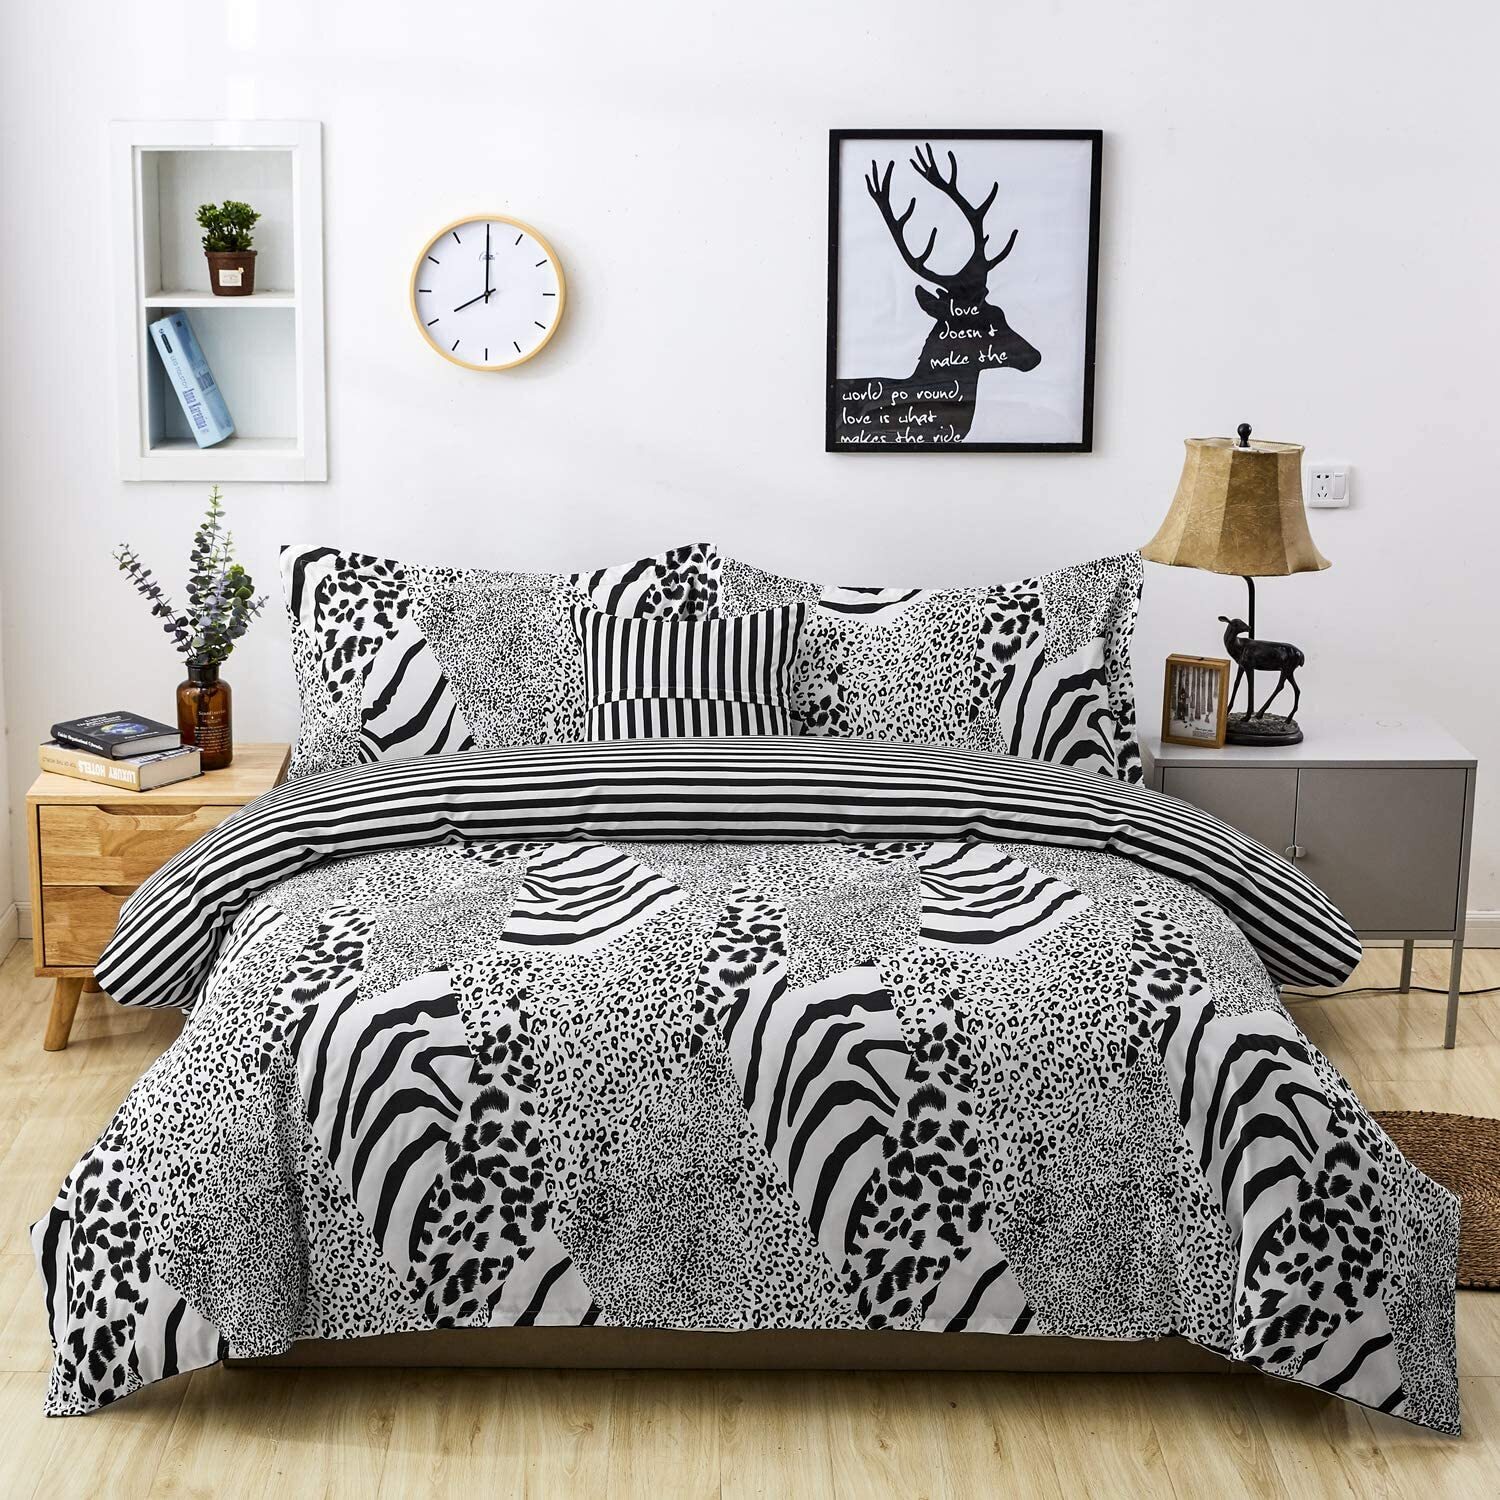 Zebra Animal Print Bed Sheets